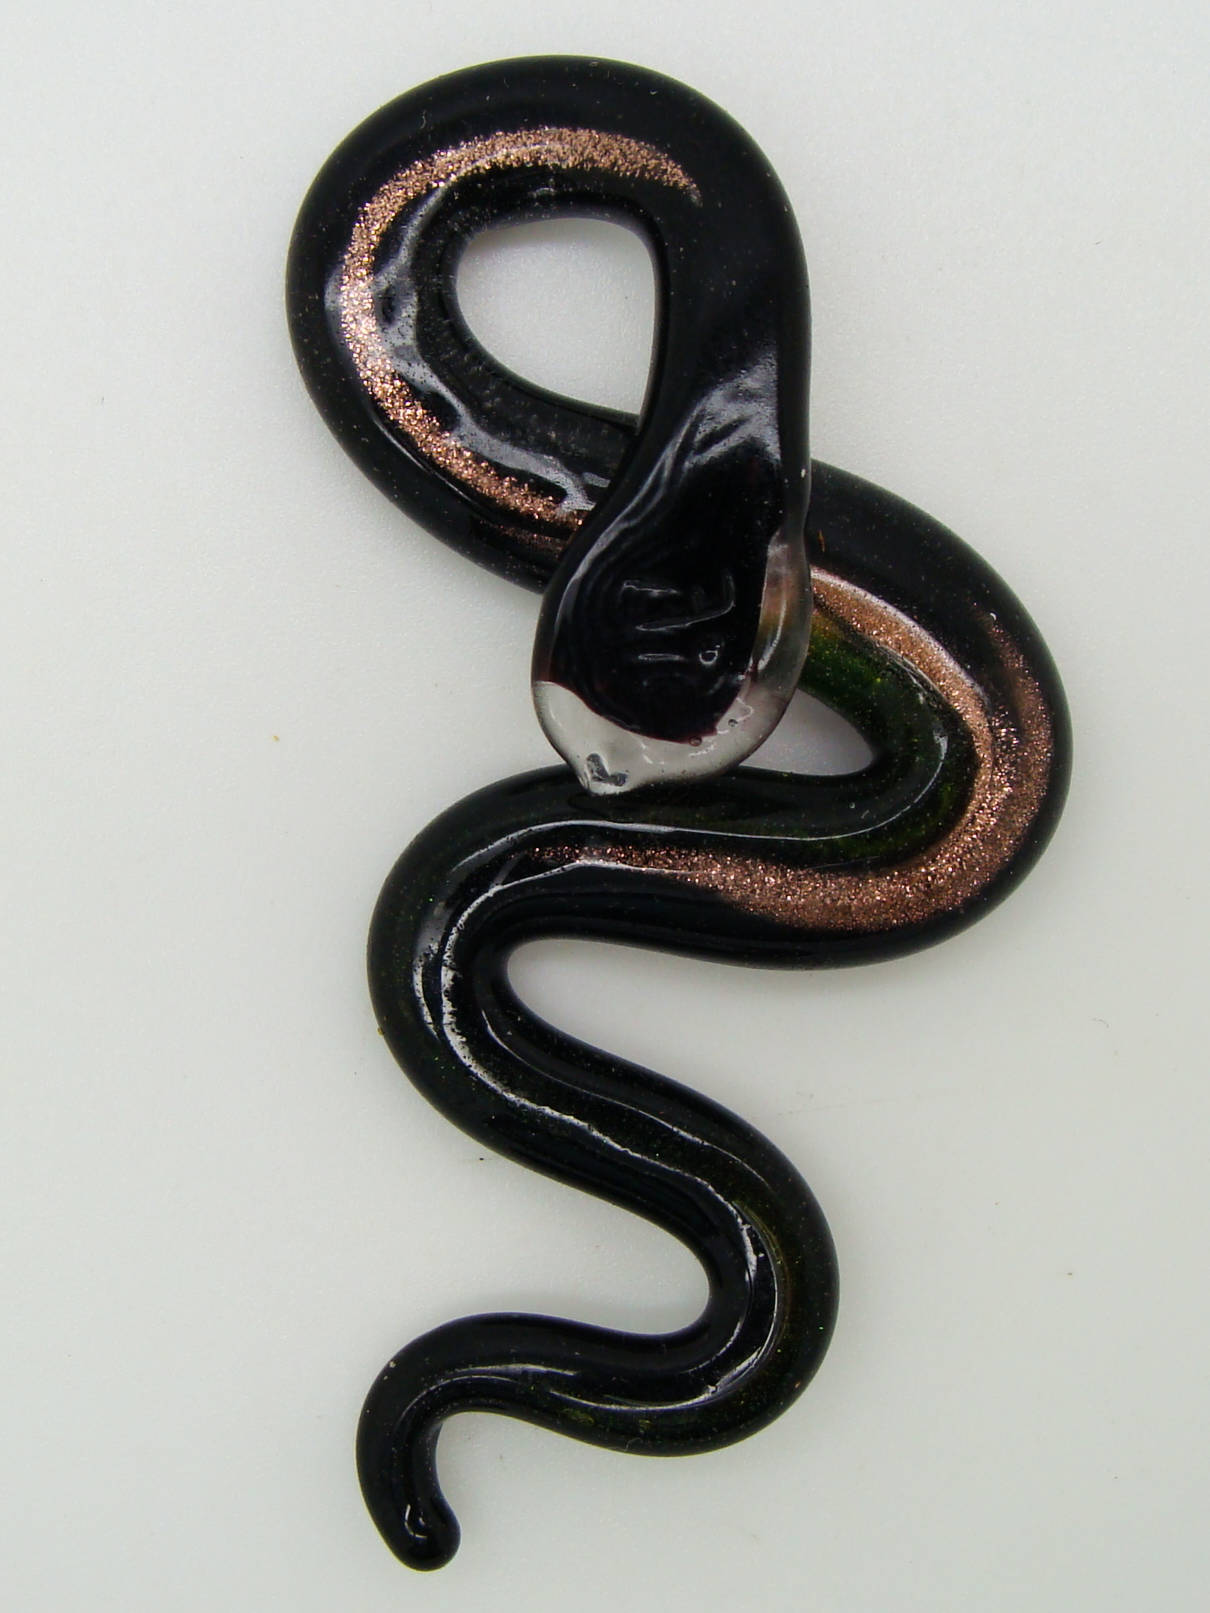 Pend-254-3 pendenitf serpent noir dore lampwork